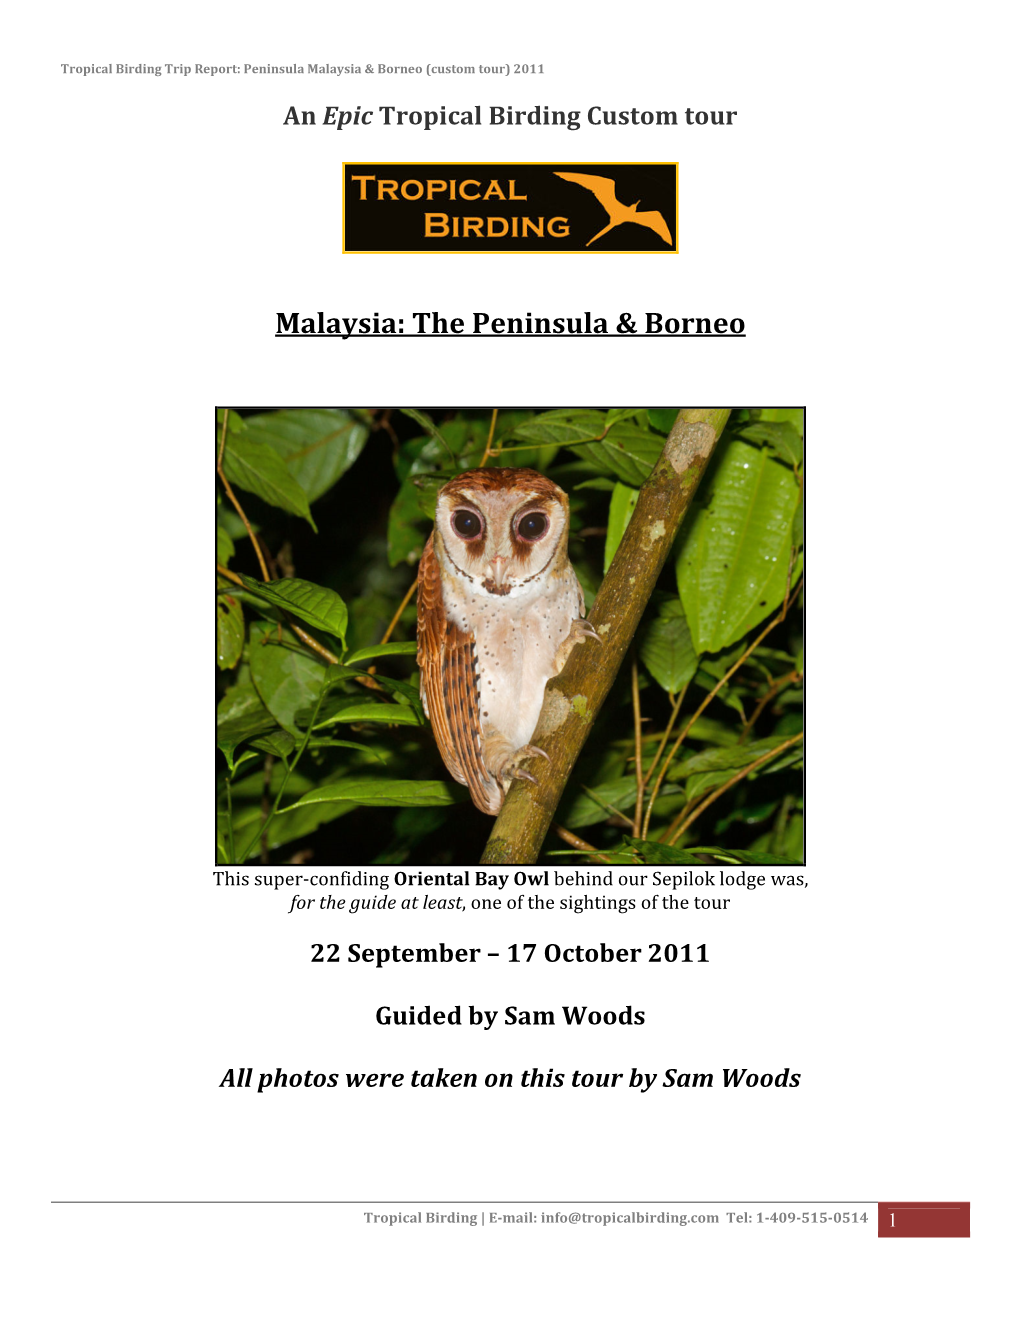 Malaysia: the Peninsula & Borneo